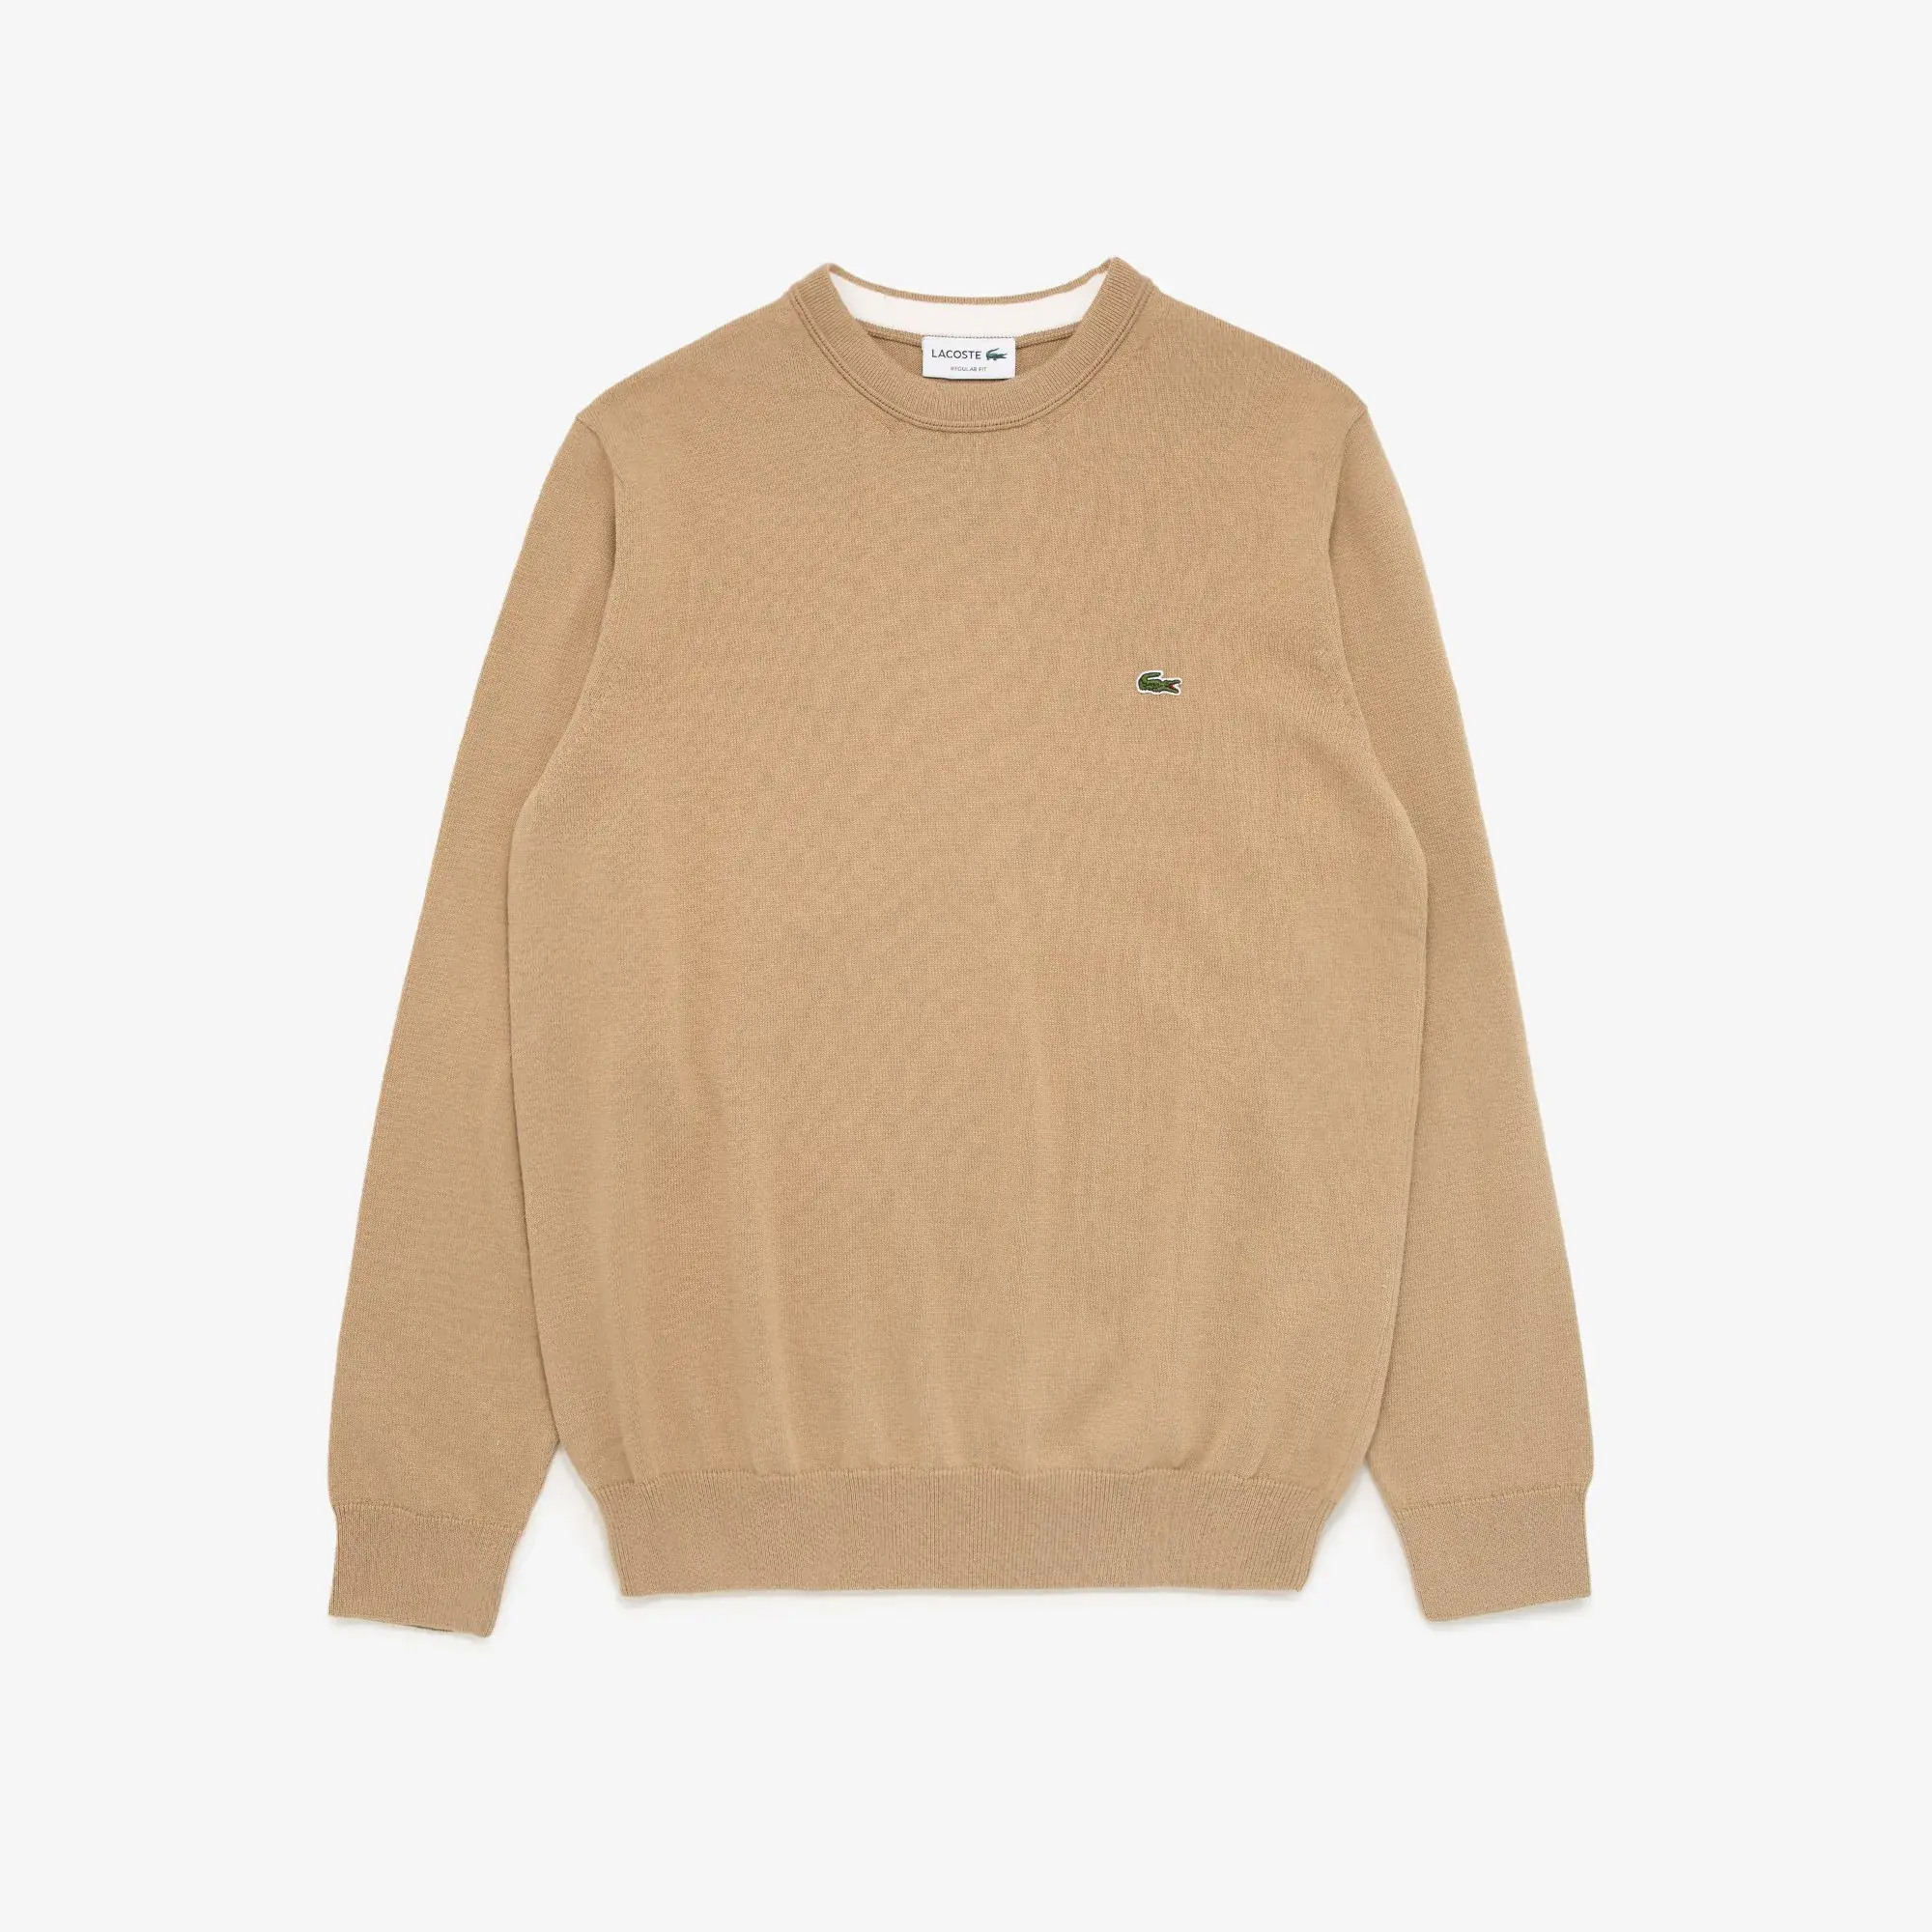 Lacoste Men’s Crew Neck Cotton Sweater. 1